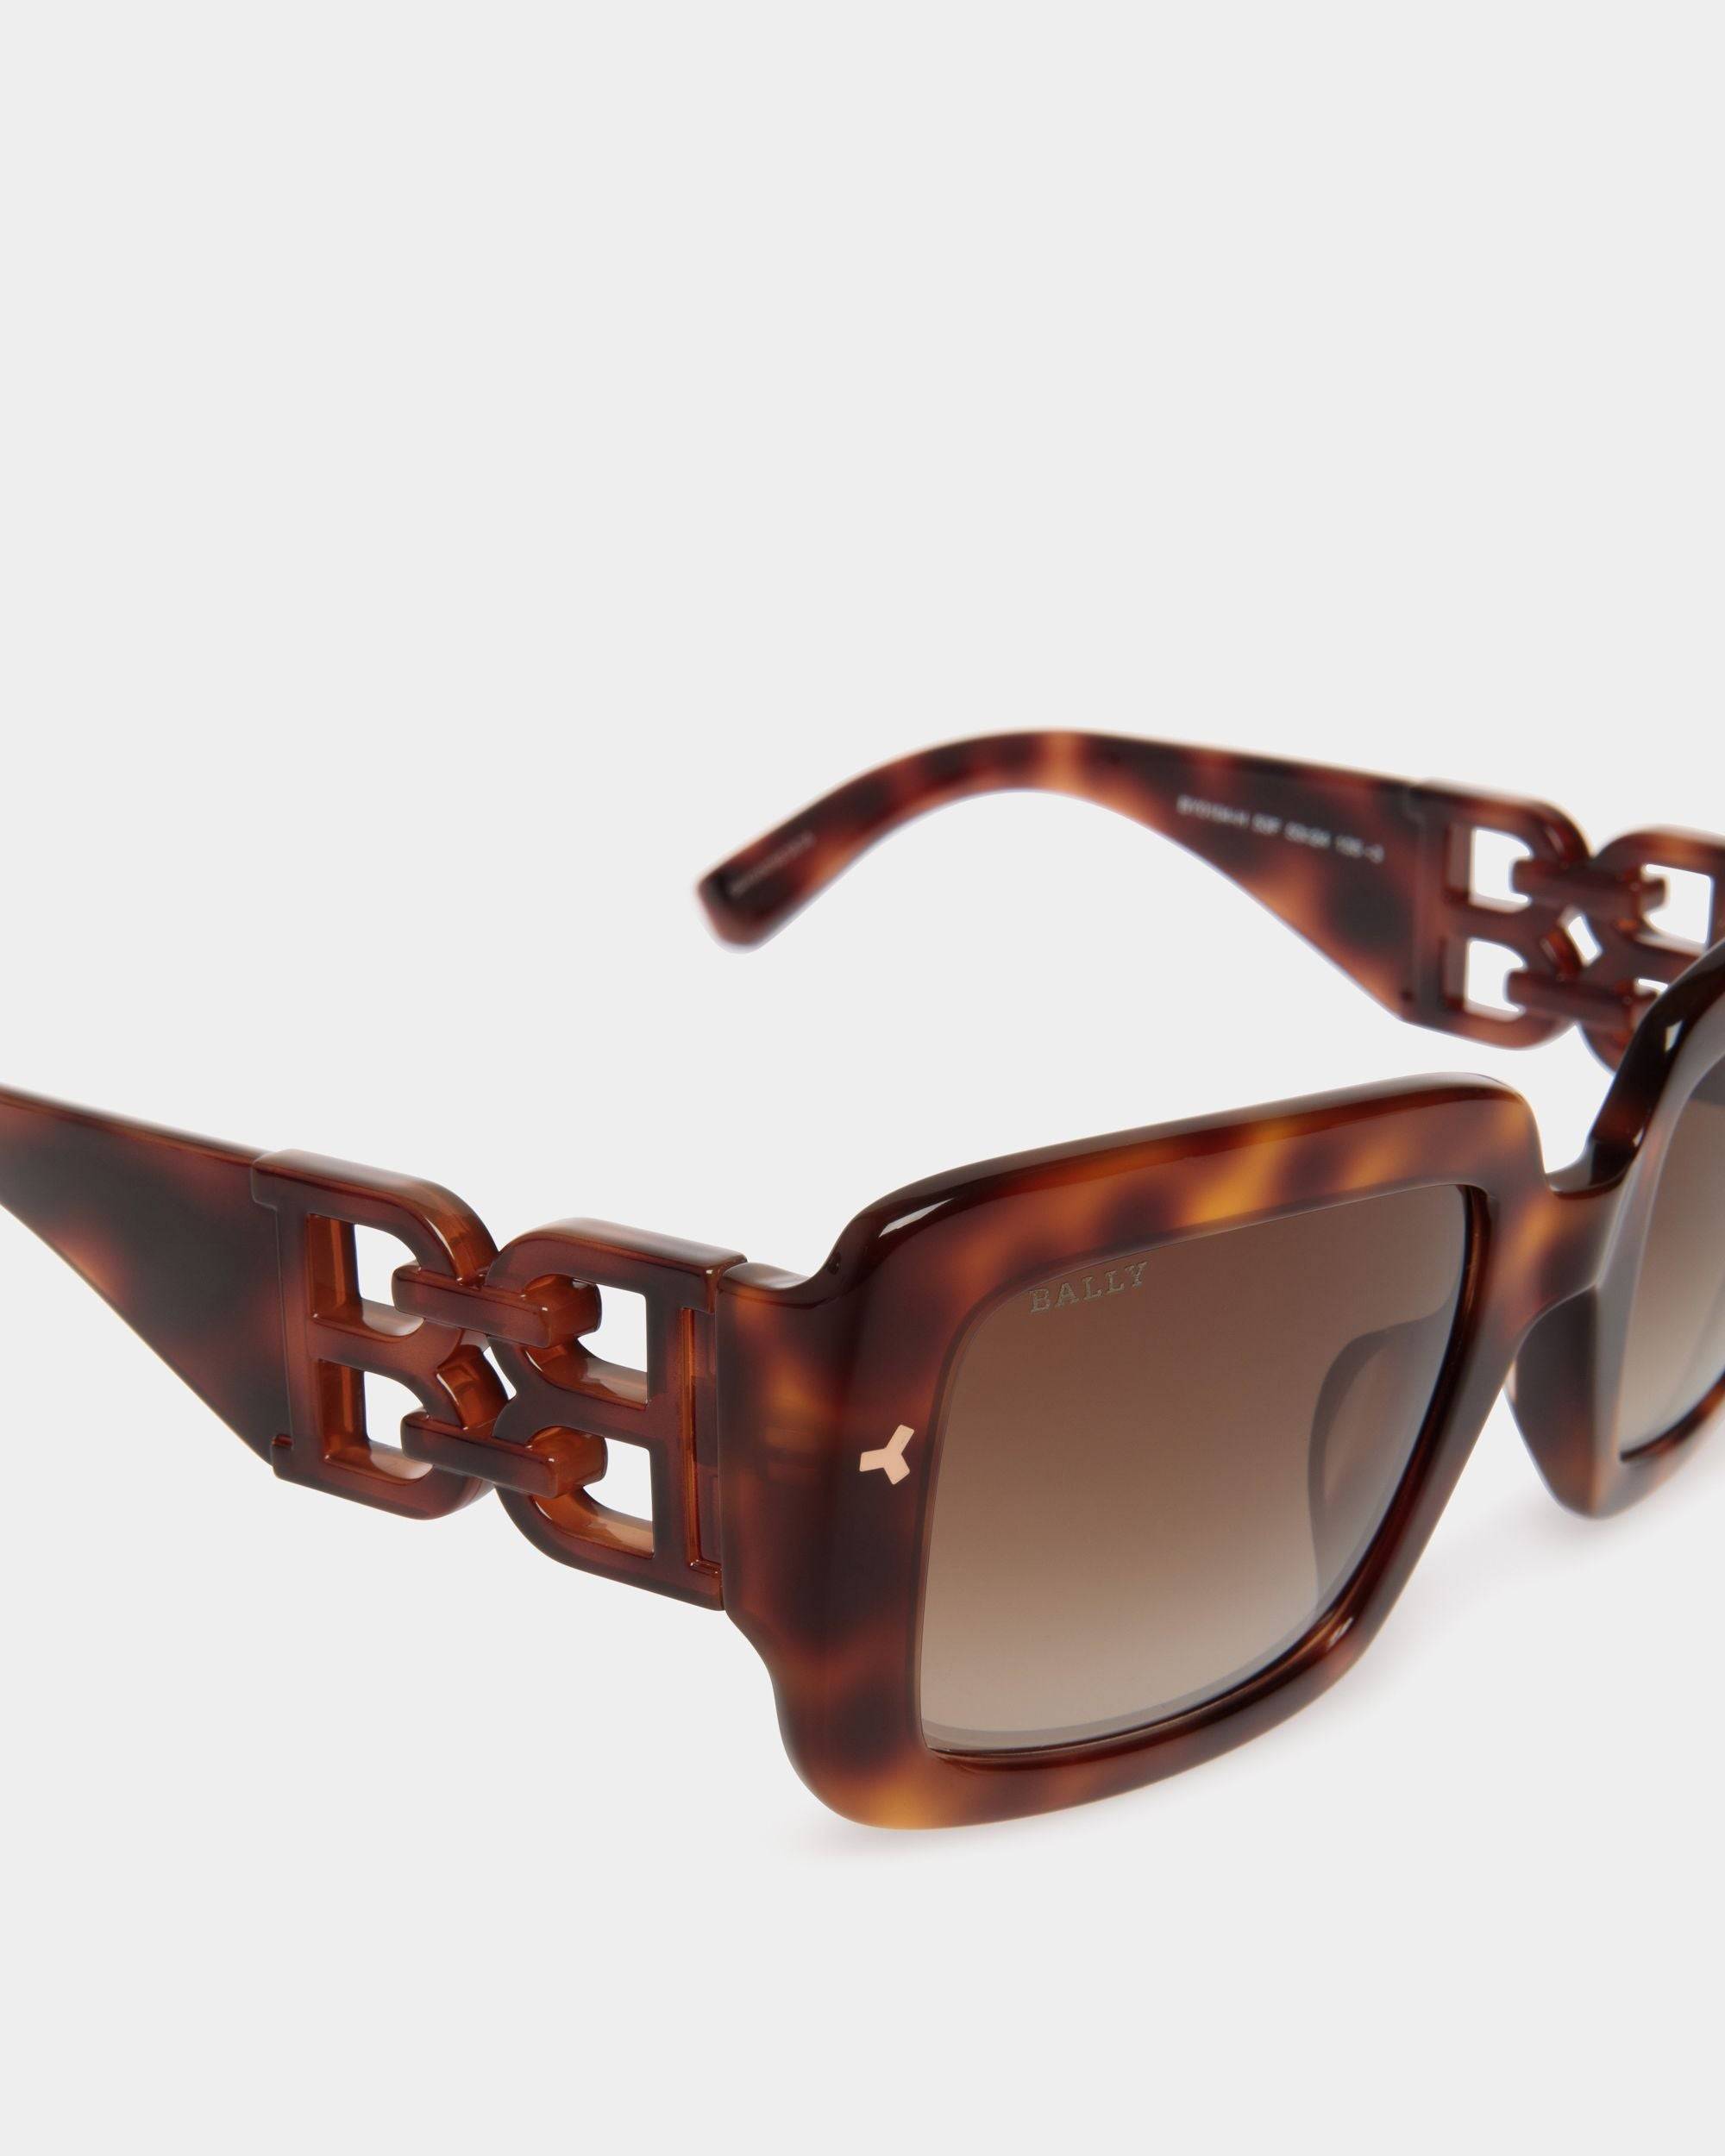 Filiana Sunglasses in Havana Brown & Gradient Brown Lenses Acetate Sunglasses In Havana Brown - Women's - Bally - 04